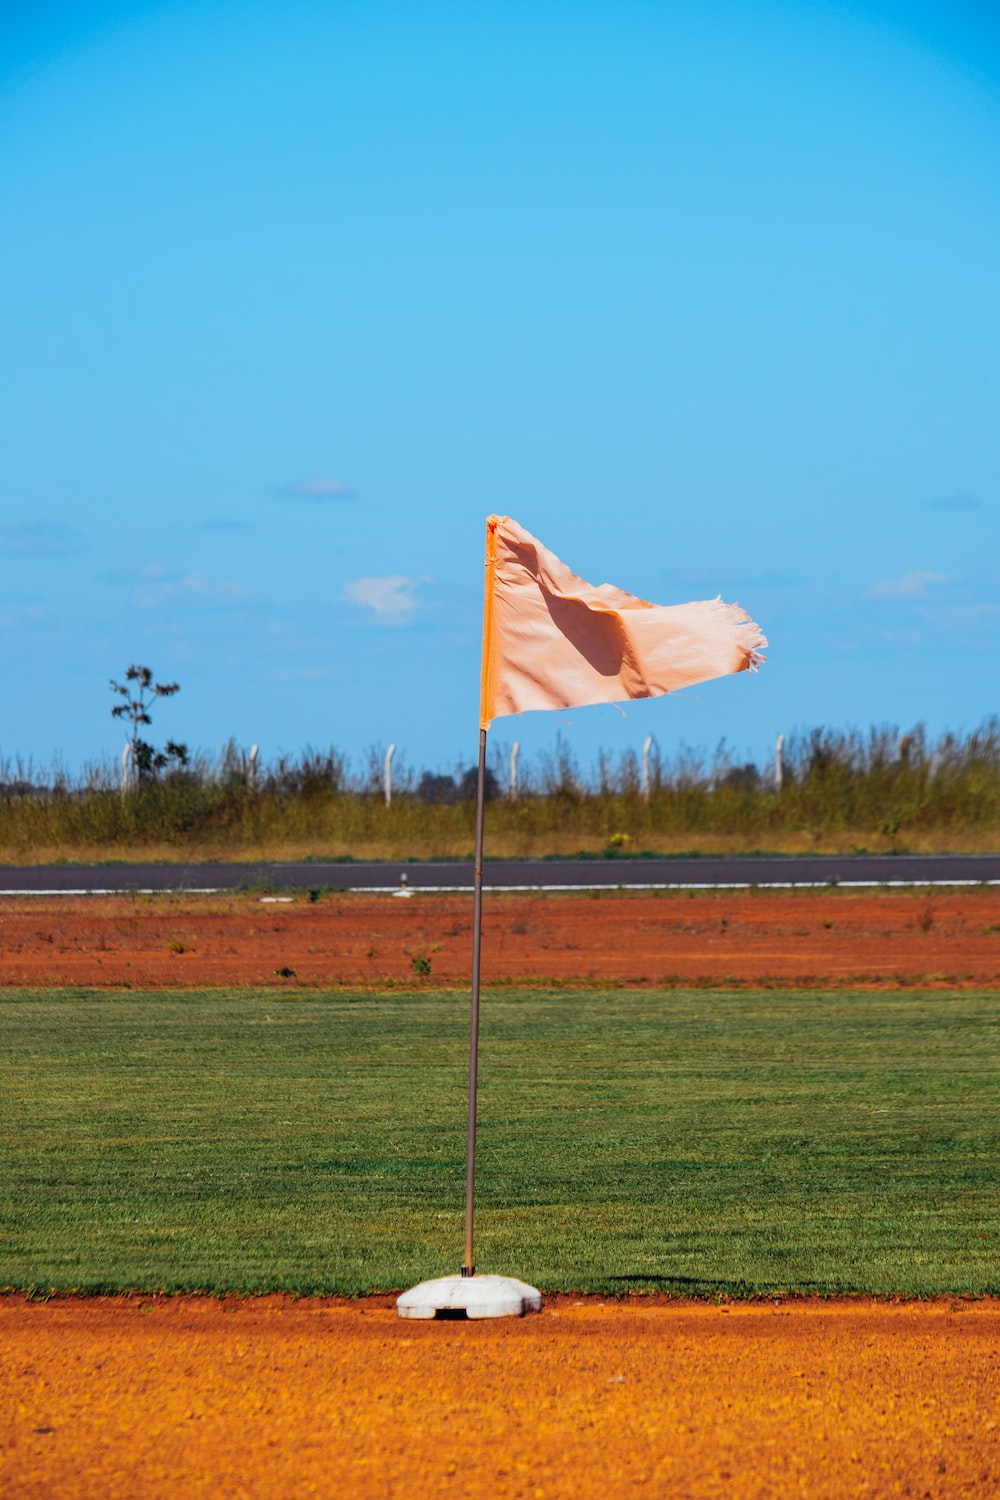 a flag on a baseball field with a dirt base